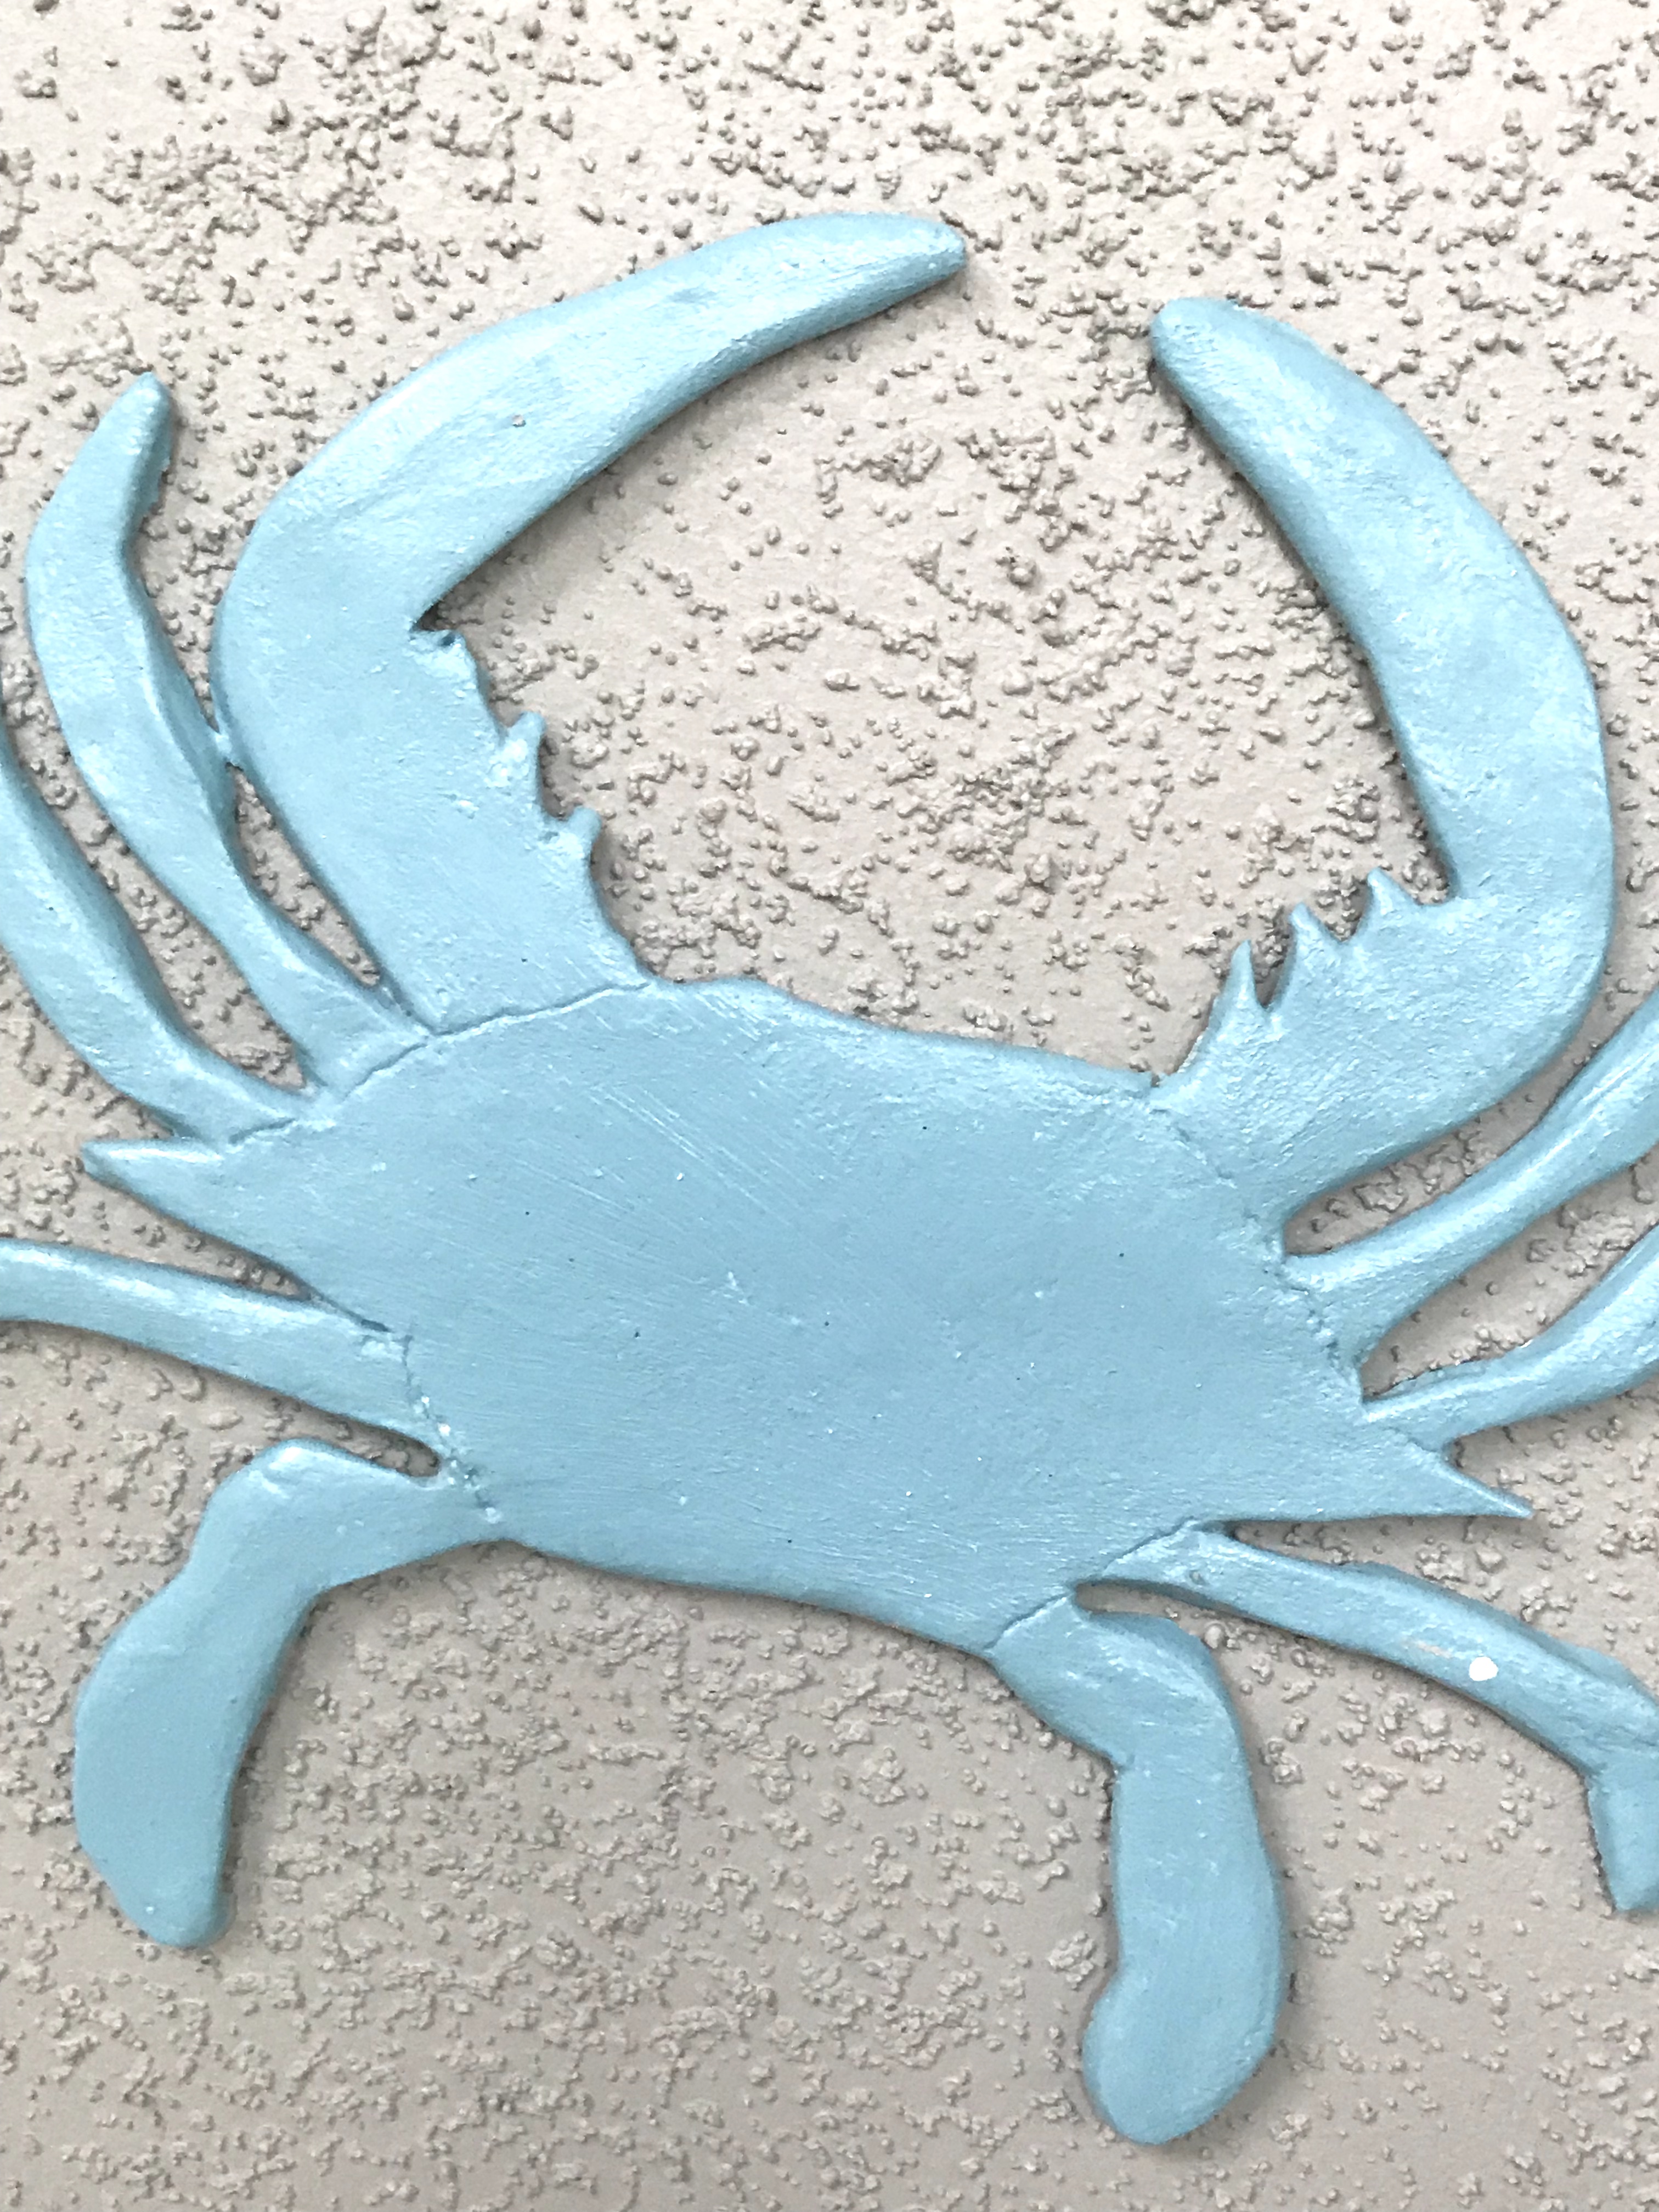 Krabben aus Modelliermasse; Maritime Deko aus lufttrocknemdem Ton basteln, Sommerdeko selber machen; #Chalet8, #Krabben